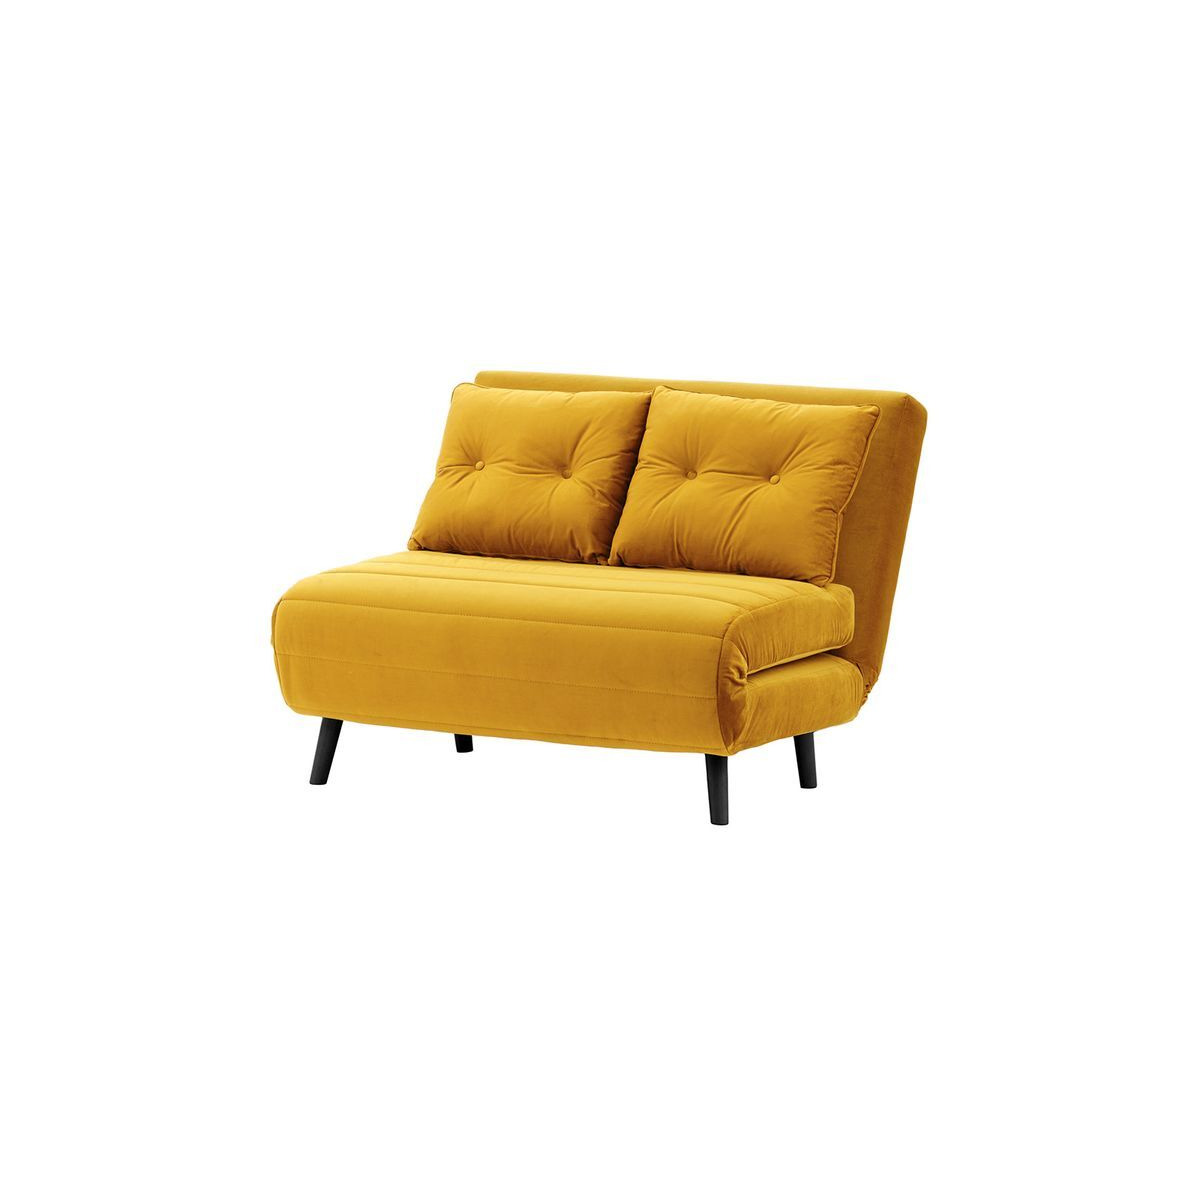 Flic Small Sofa Bed - width 103 cm, yellow, Leg colour: like oak - image 1